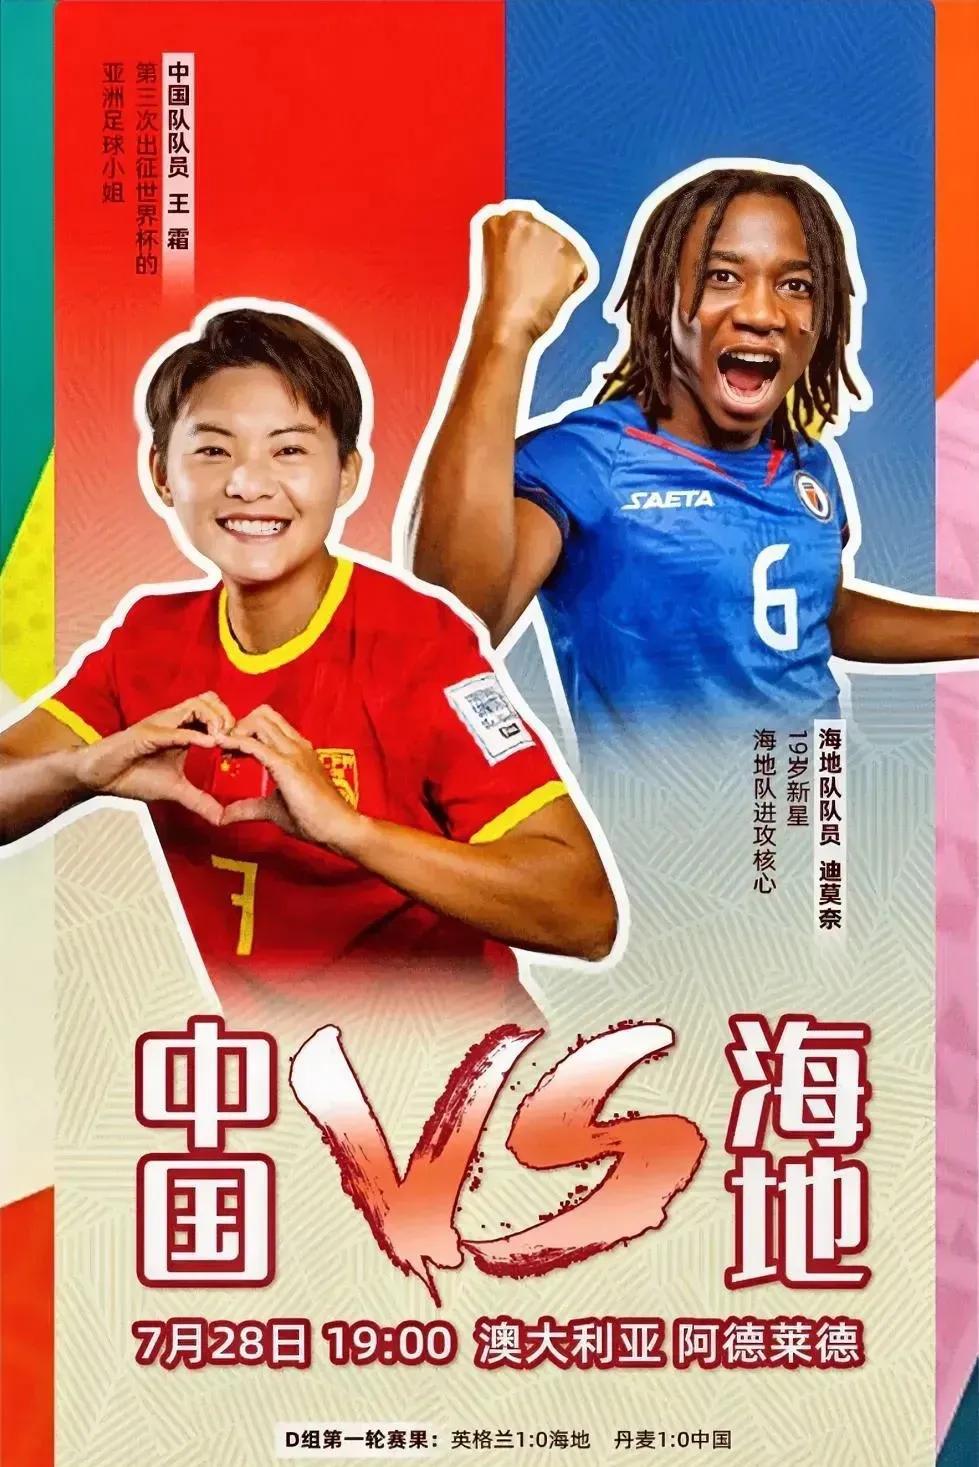 CCTV5是怎么了？他们竟然不直播中国女足对海地的比赛！这可是小组赛的关键战役，(1)